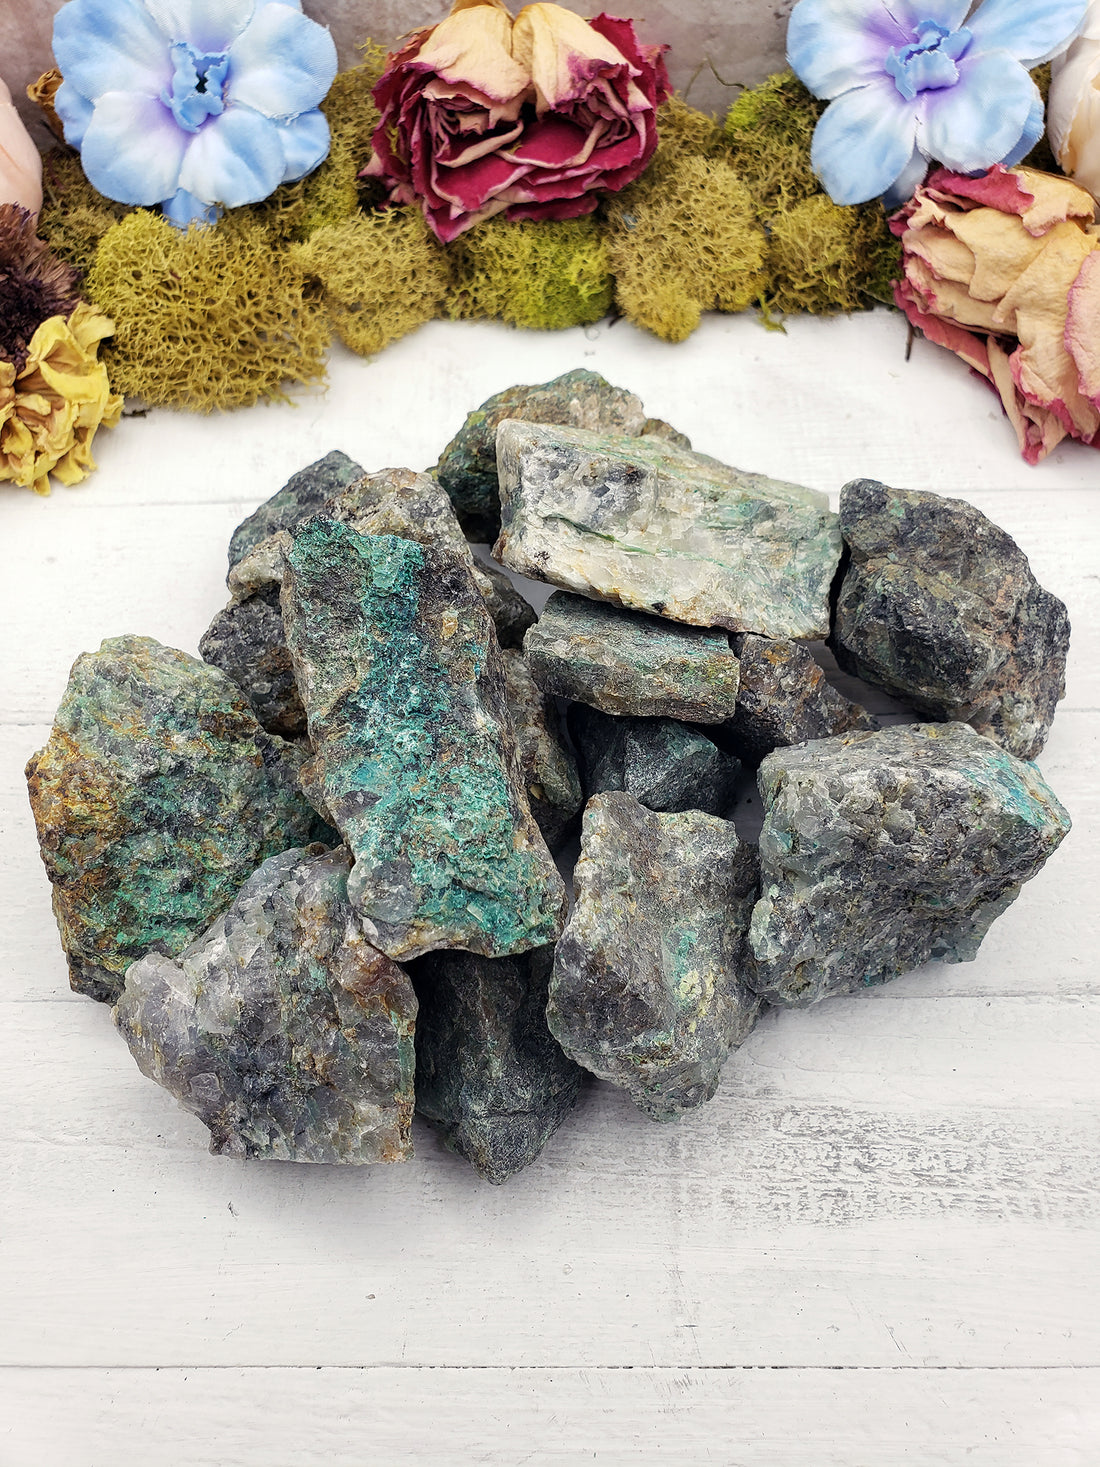 several rough chrysoprase stones on display